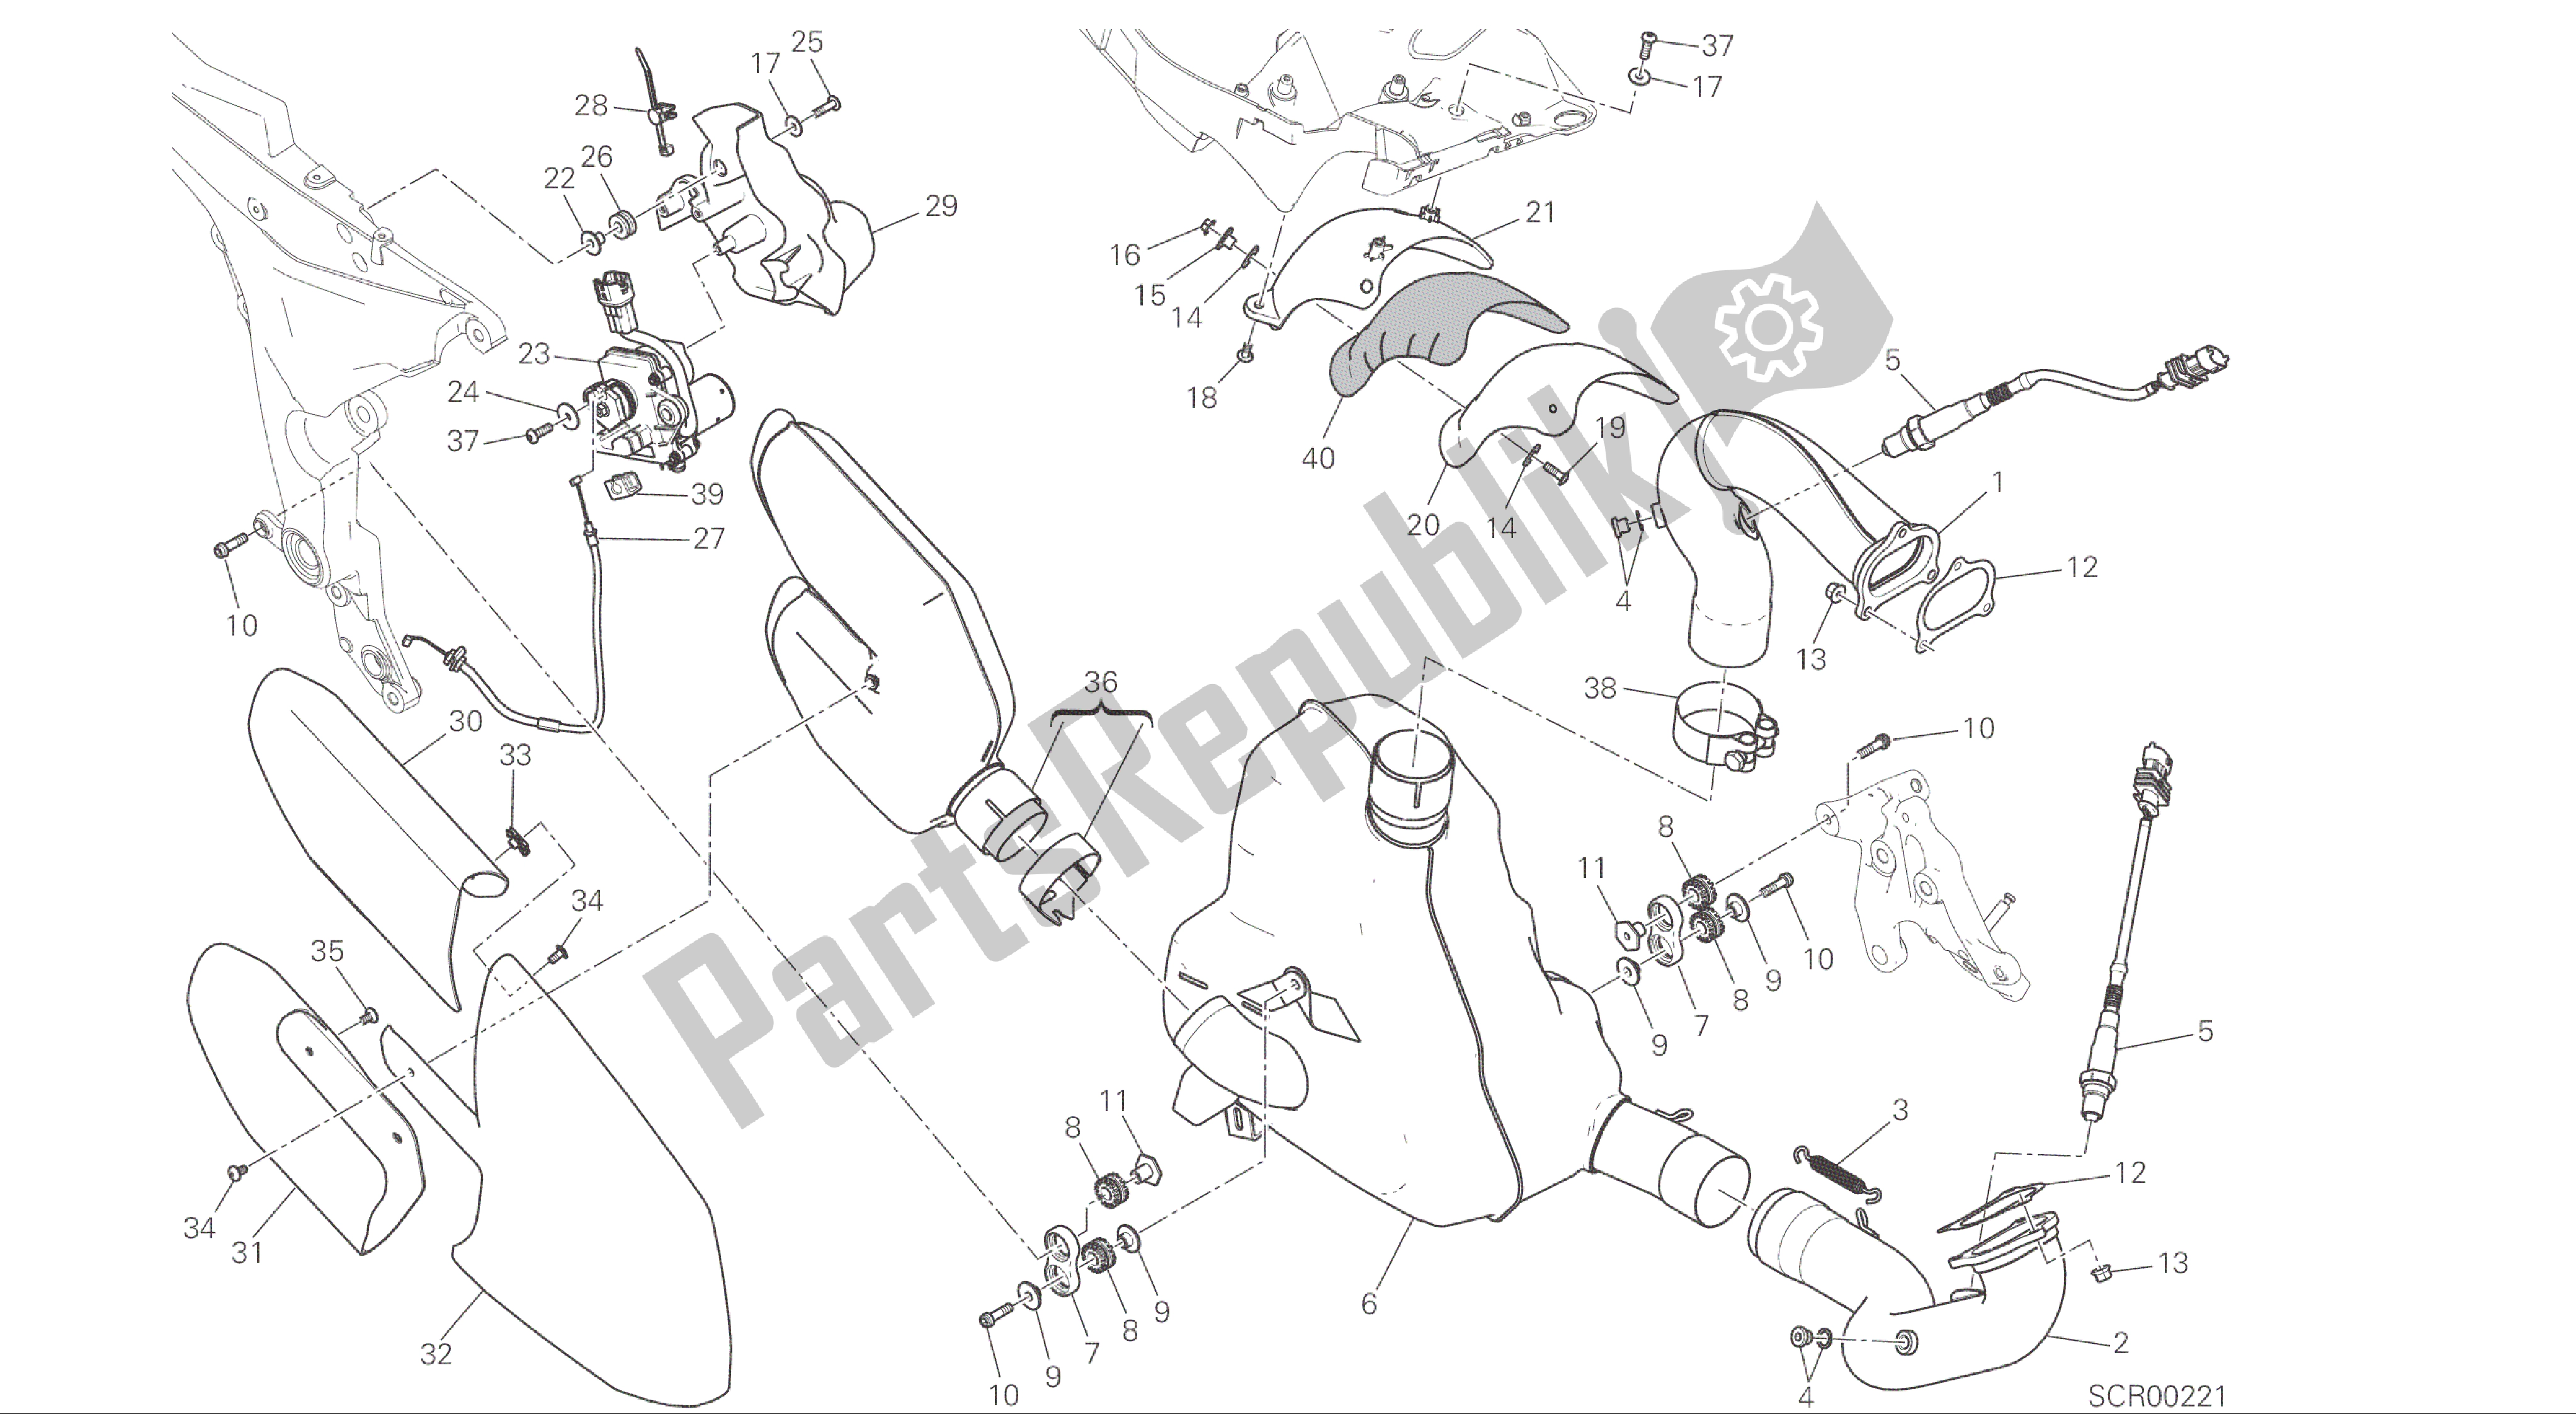 Todas las partes para Dibujo 019 - Sistema De Escape [mod: Ms1200; Xst: Marco De Grupo Aus, Eur, Fra, Jap] de Ducati Multistrada 1200 2015